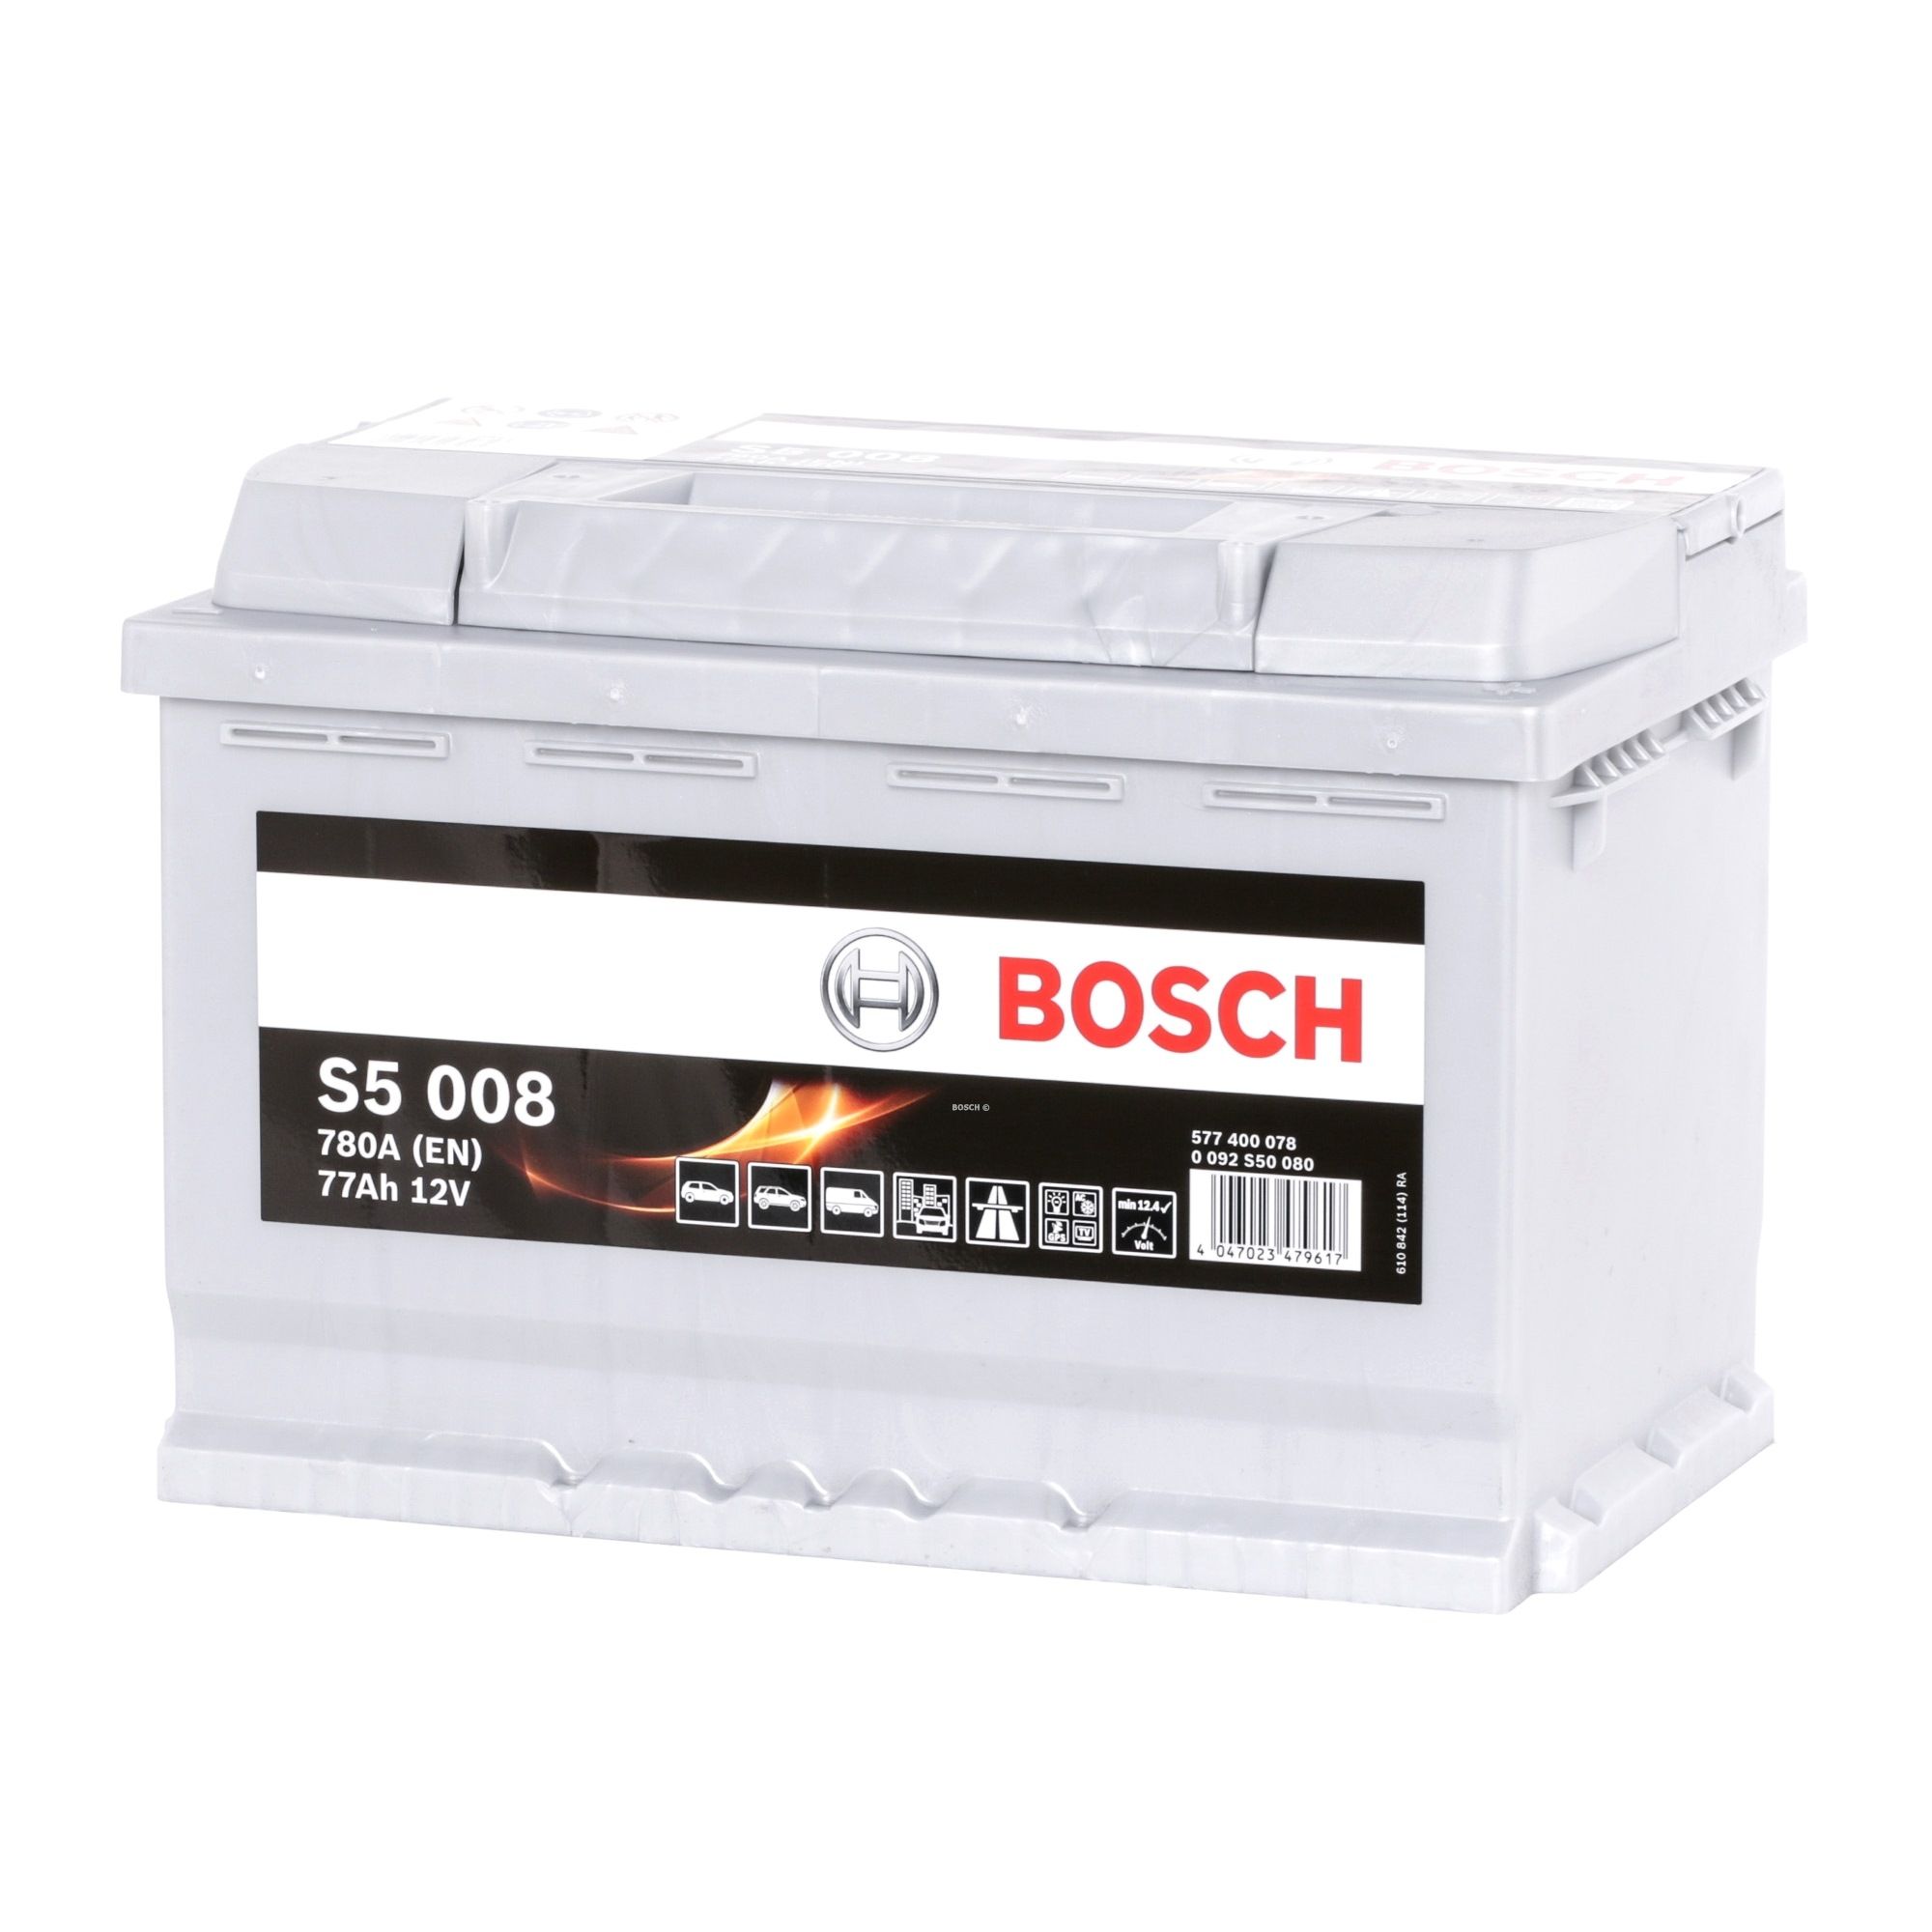 S5 008 BOSCH S5 0 092 S50 080 JAGUAR Autobatterie Preis und Erfahrung